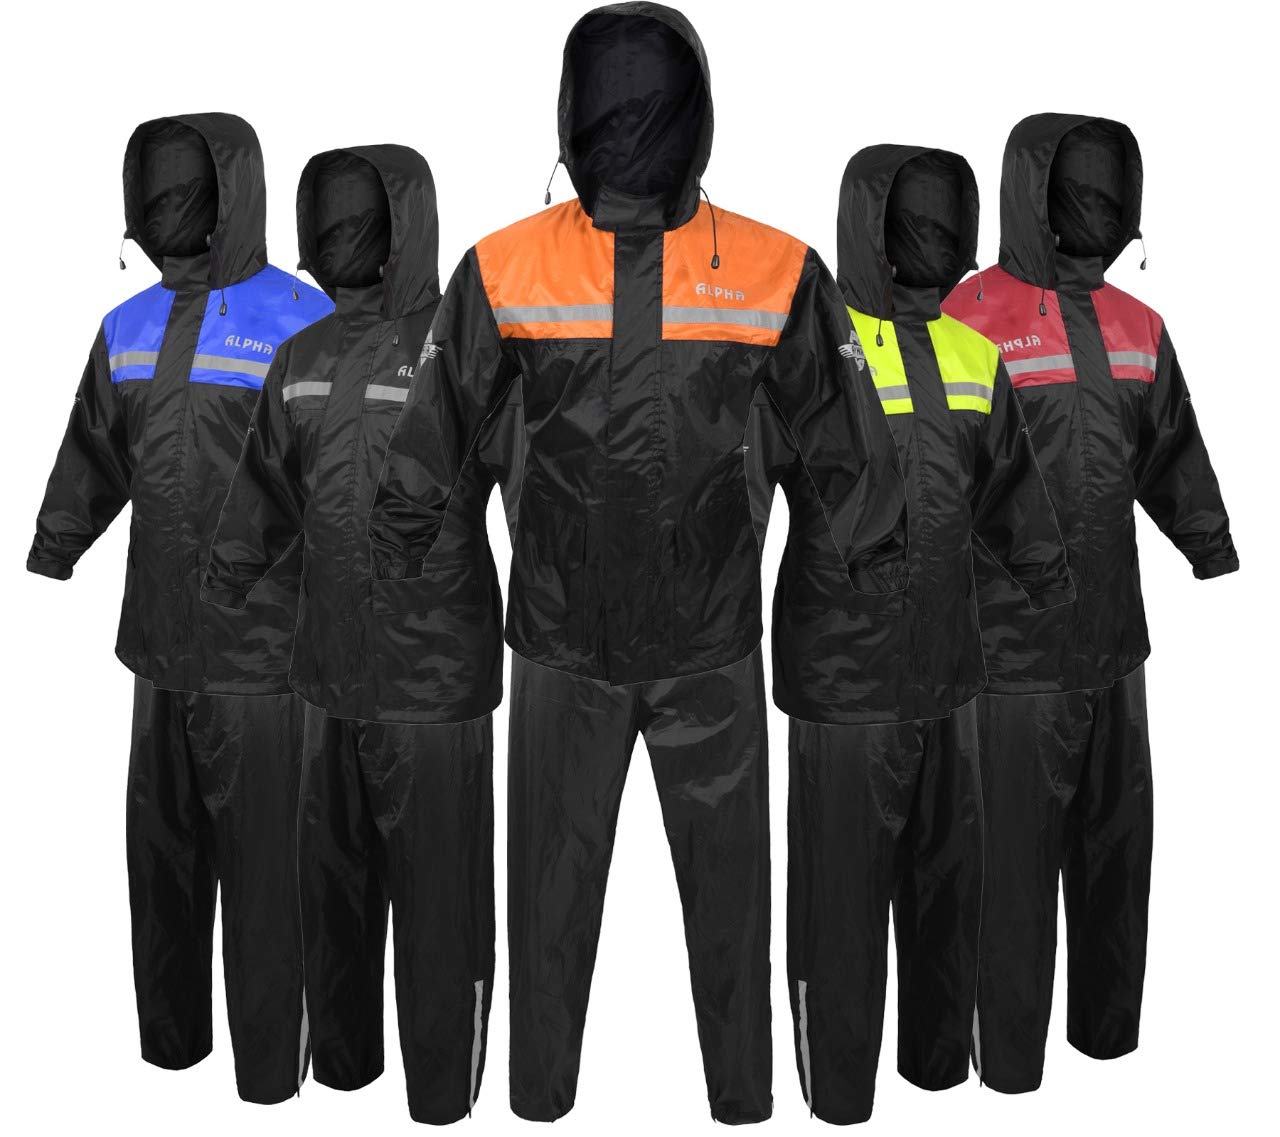 Alpha Cycle Gear Rain Suit for Men & Women Jackets Pant Gear Reflective Rainsuit Waterproof (ORANGE, X-LARGE)